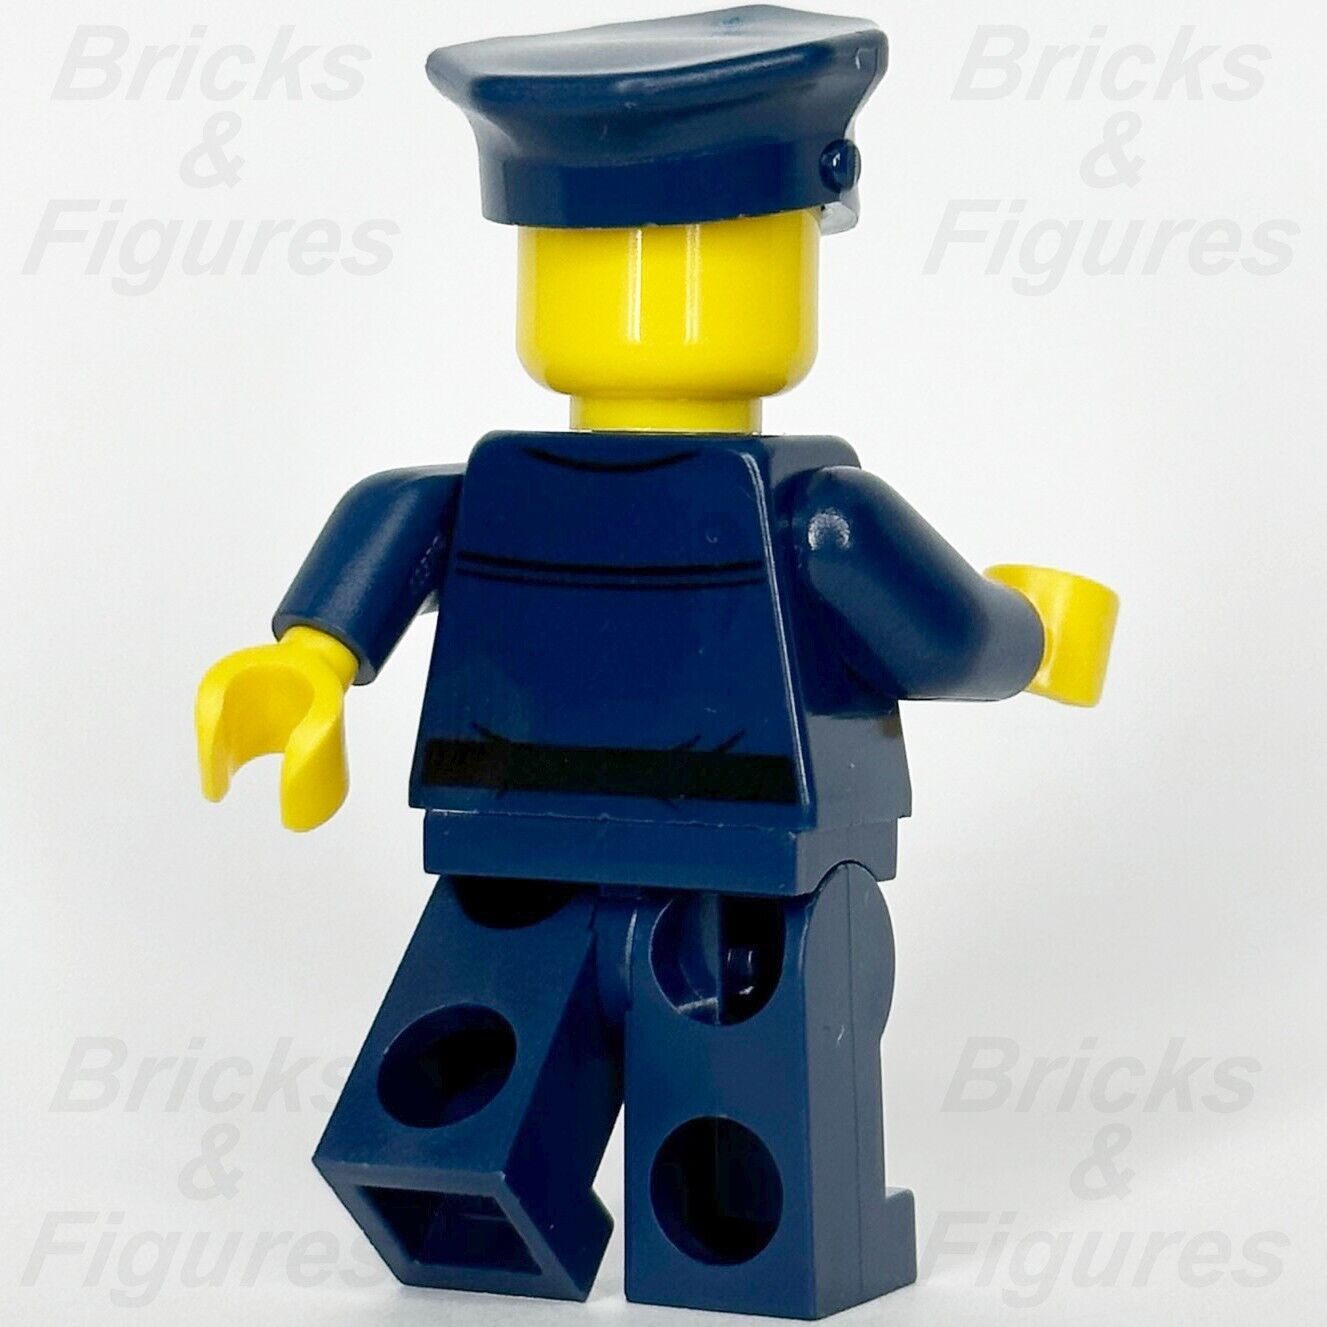 LEGO Police Officer 1940s Era Minifigure Moustache Creator Expert Town 10278 3